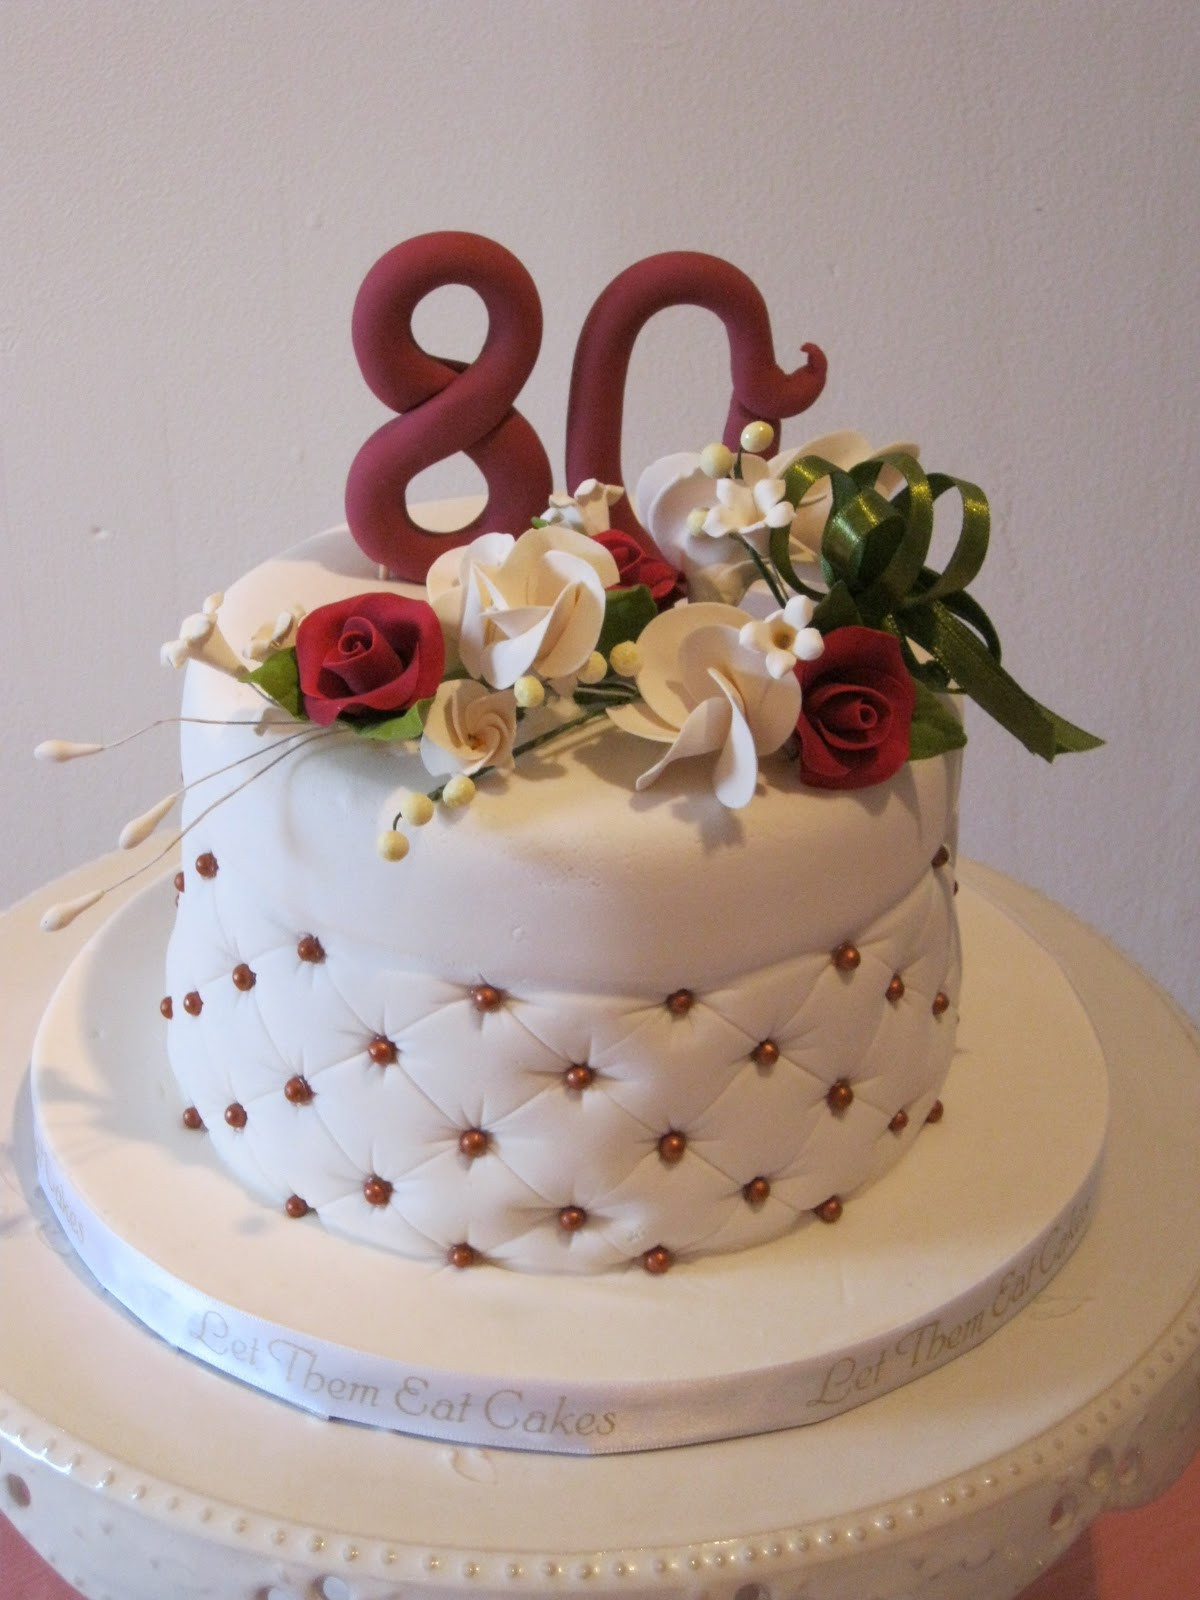 80th Birthday Cakes
 Let Them Eat Cakes 80th Birthday